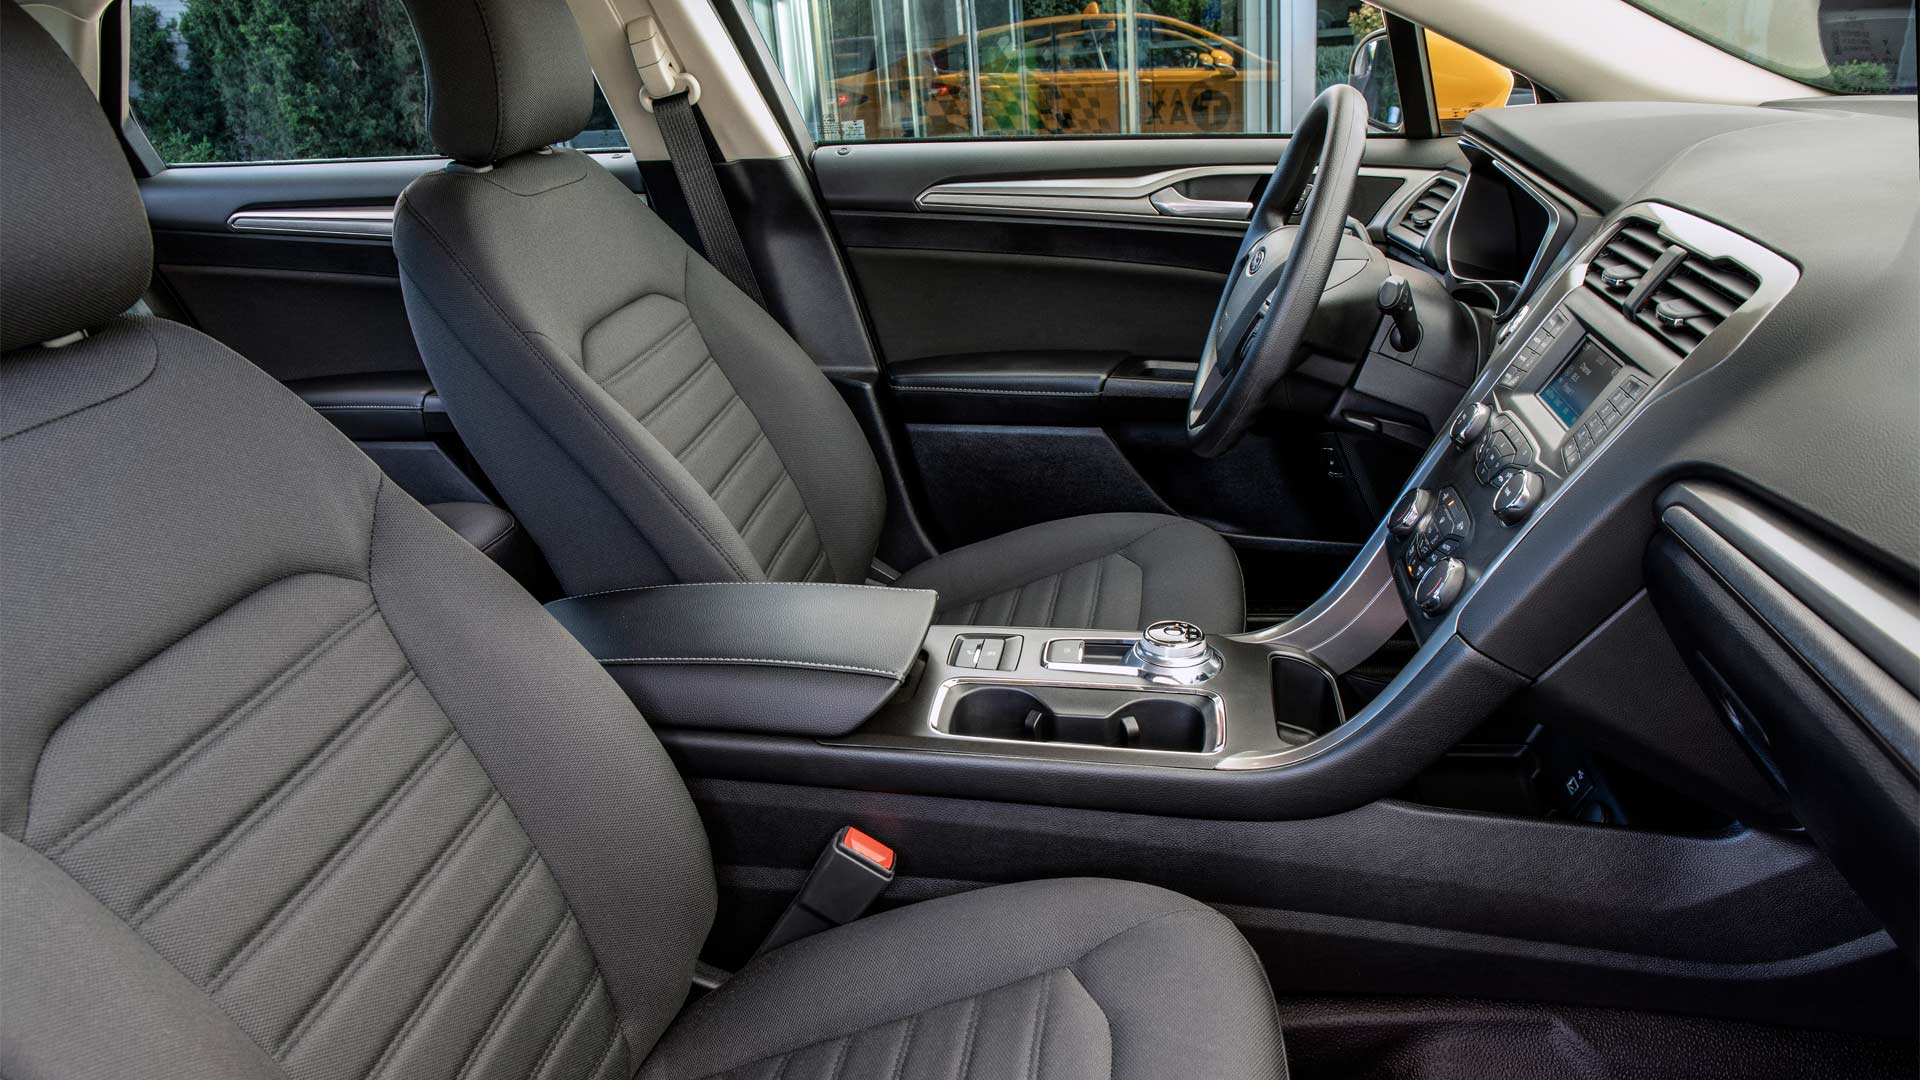 Ford-Fusion-Hybrid-Taxi-interior